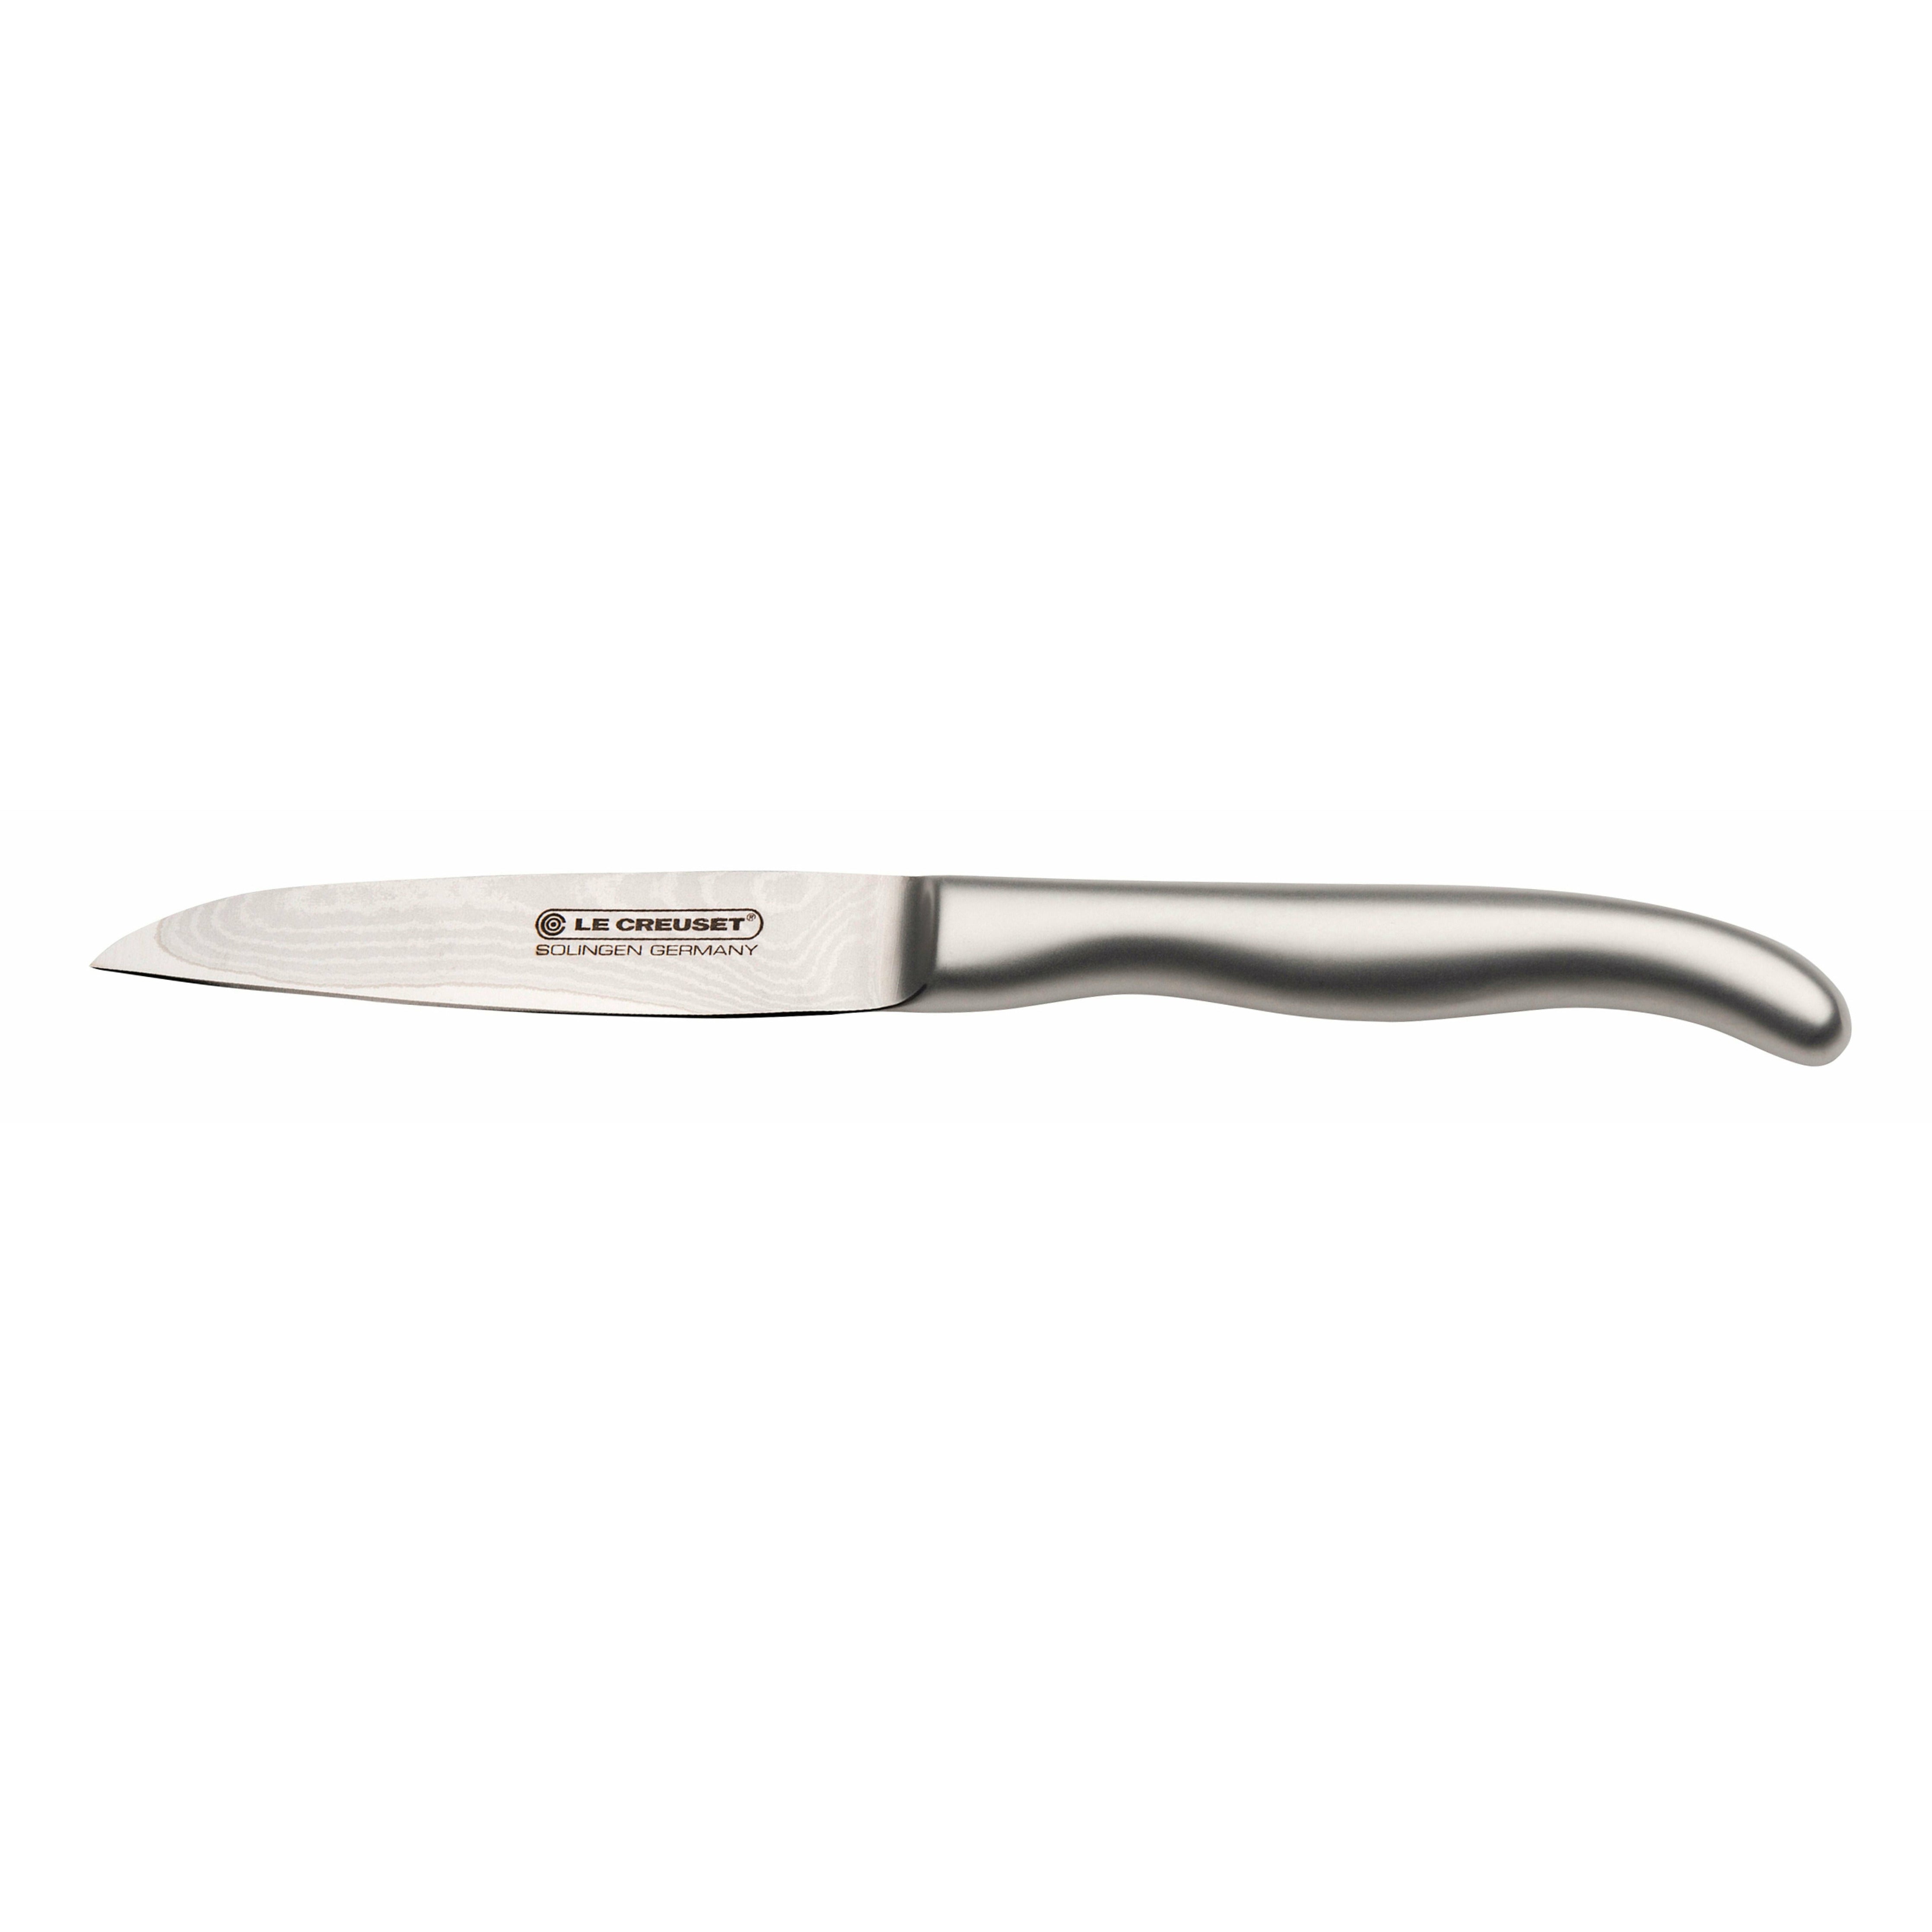 Le creuset paring kniv rustfritt stålhåndtak, 9 cm